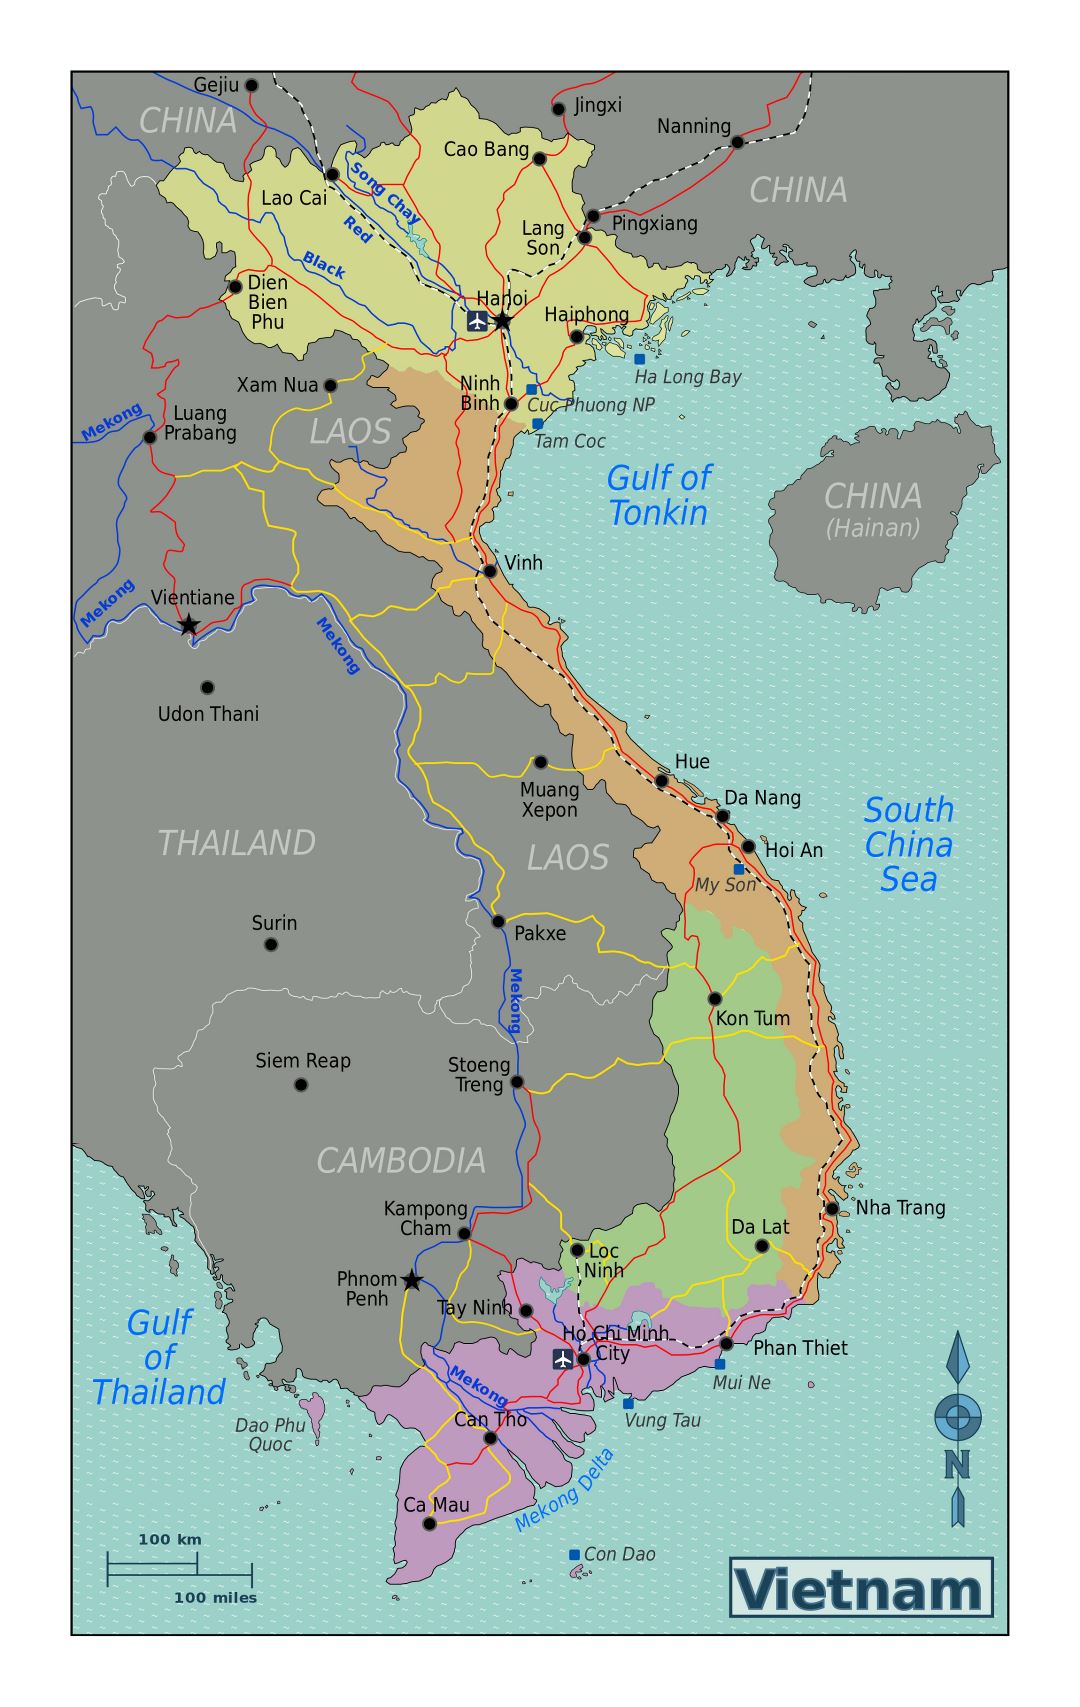 Large regions map of Vietnam